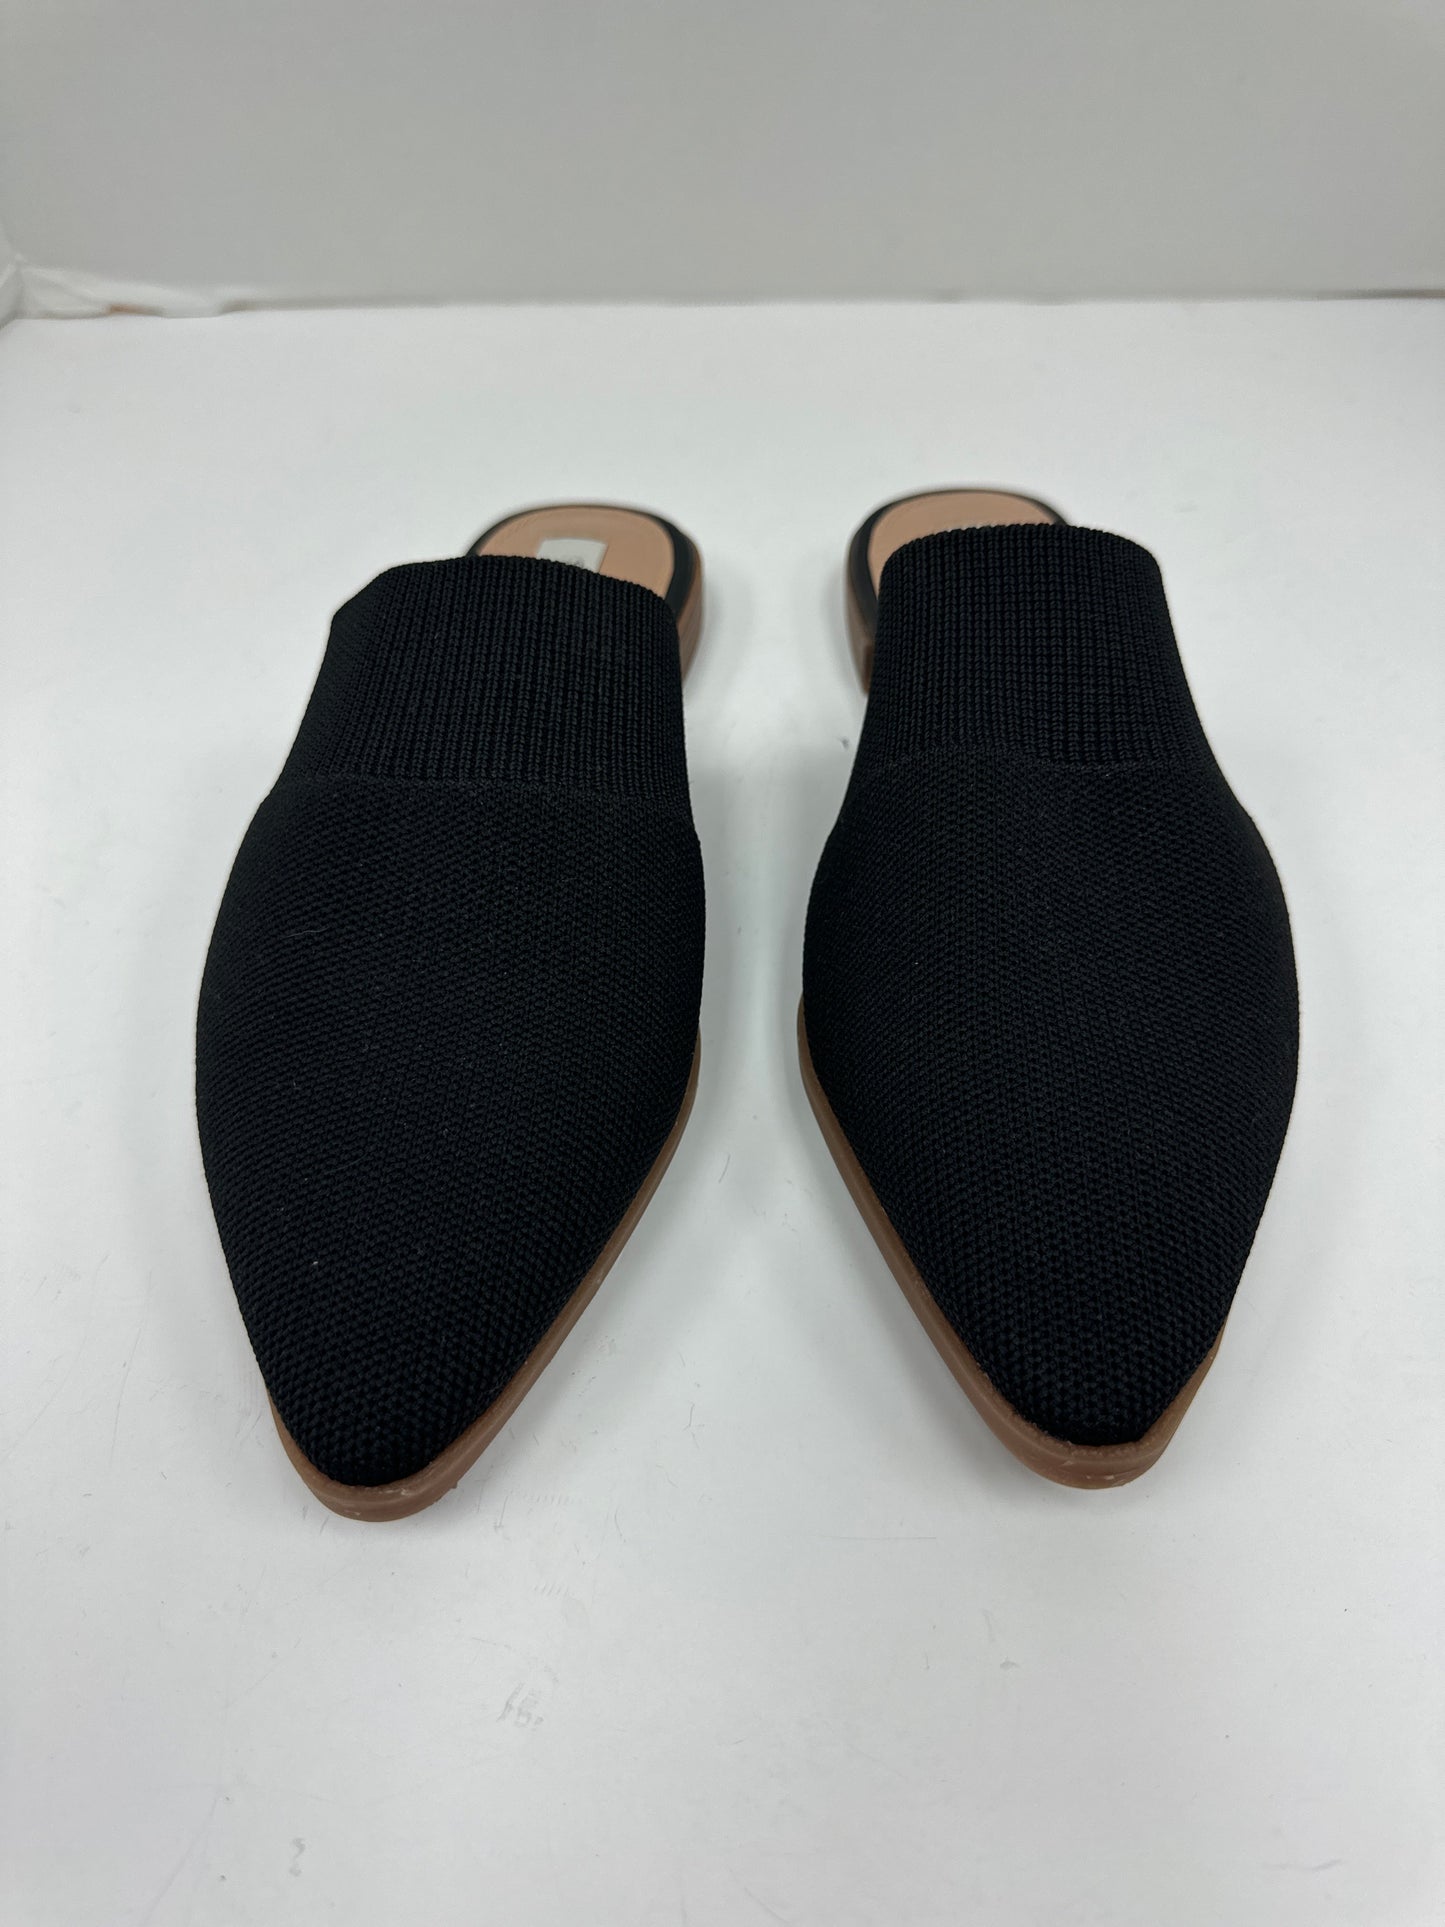 Black Shoes Flats Cmf, Size 7.5